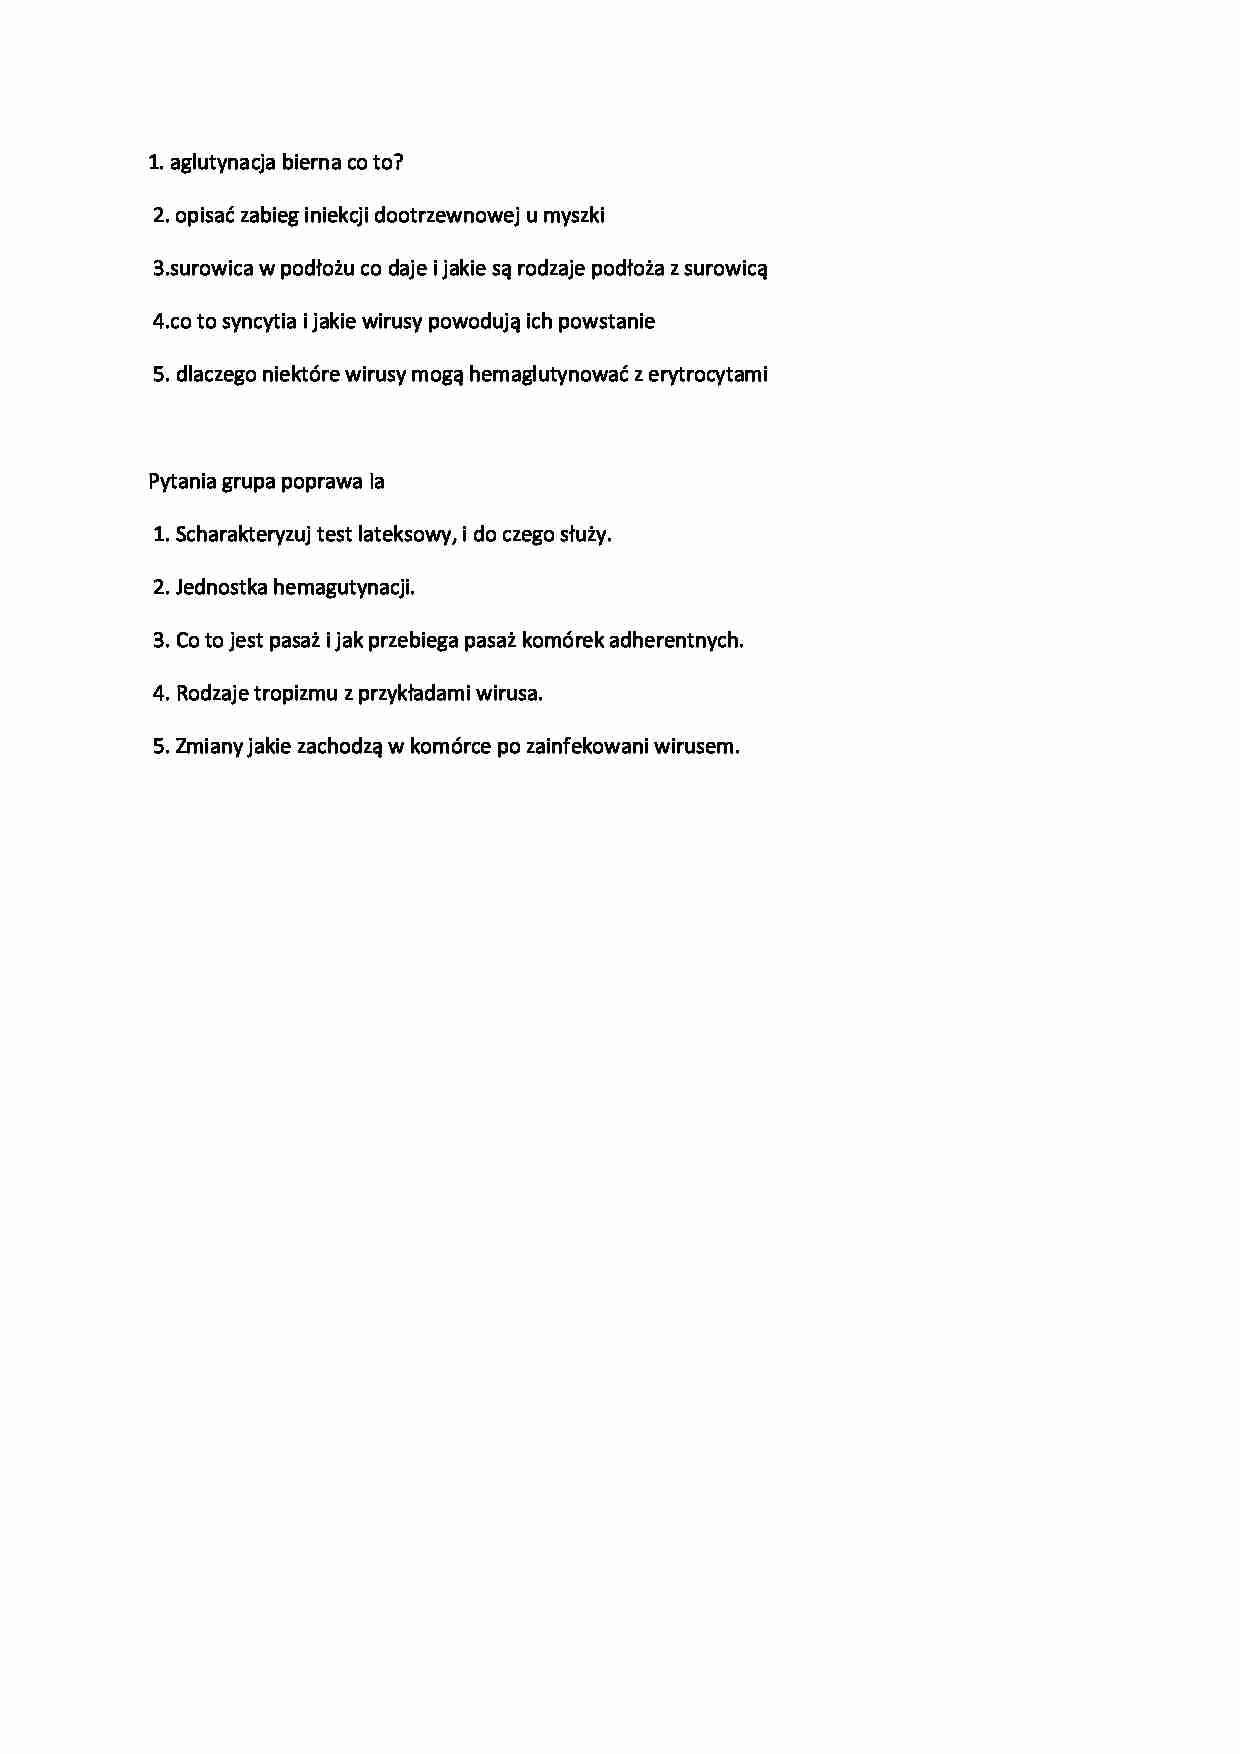 Immunologia - kolokwium 5 - strona 1